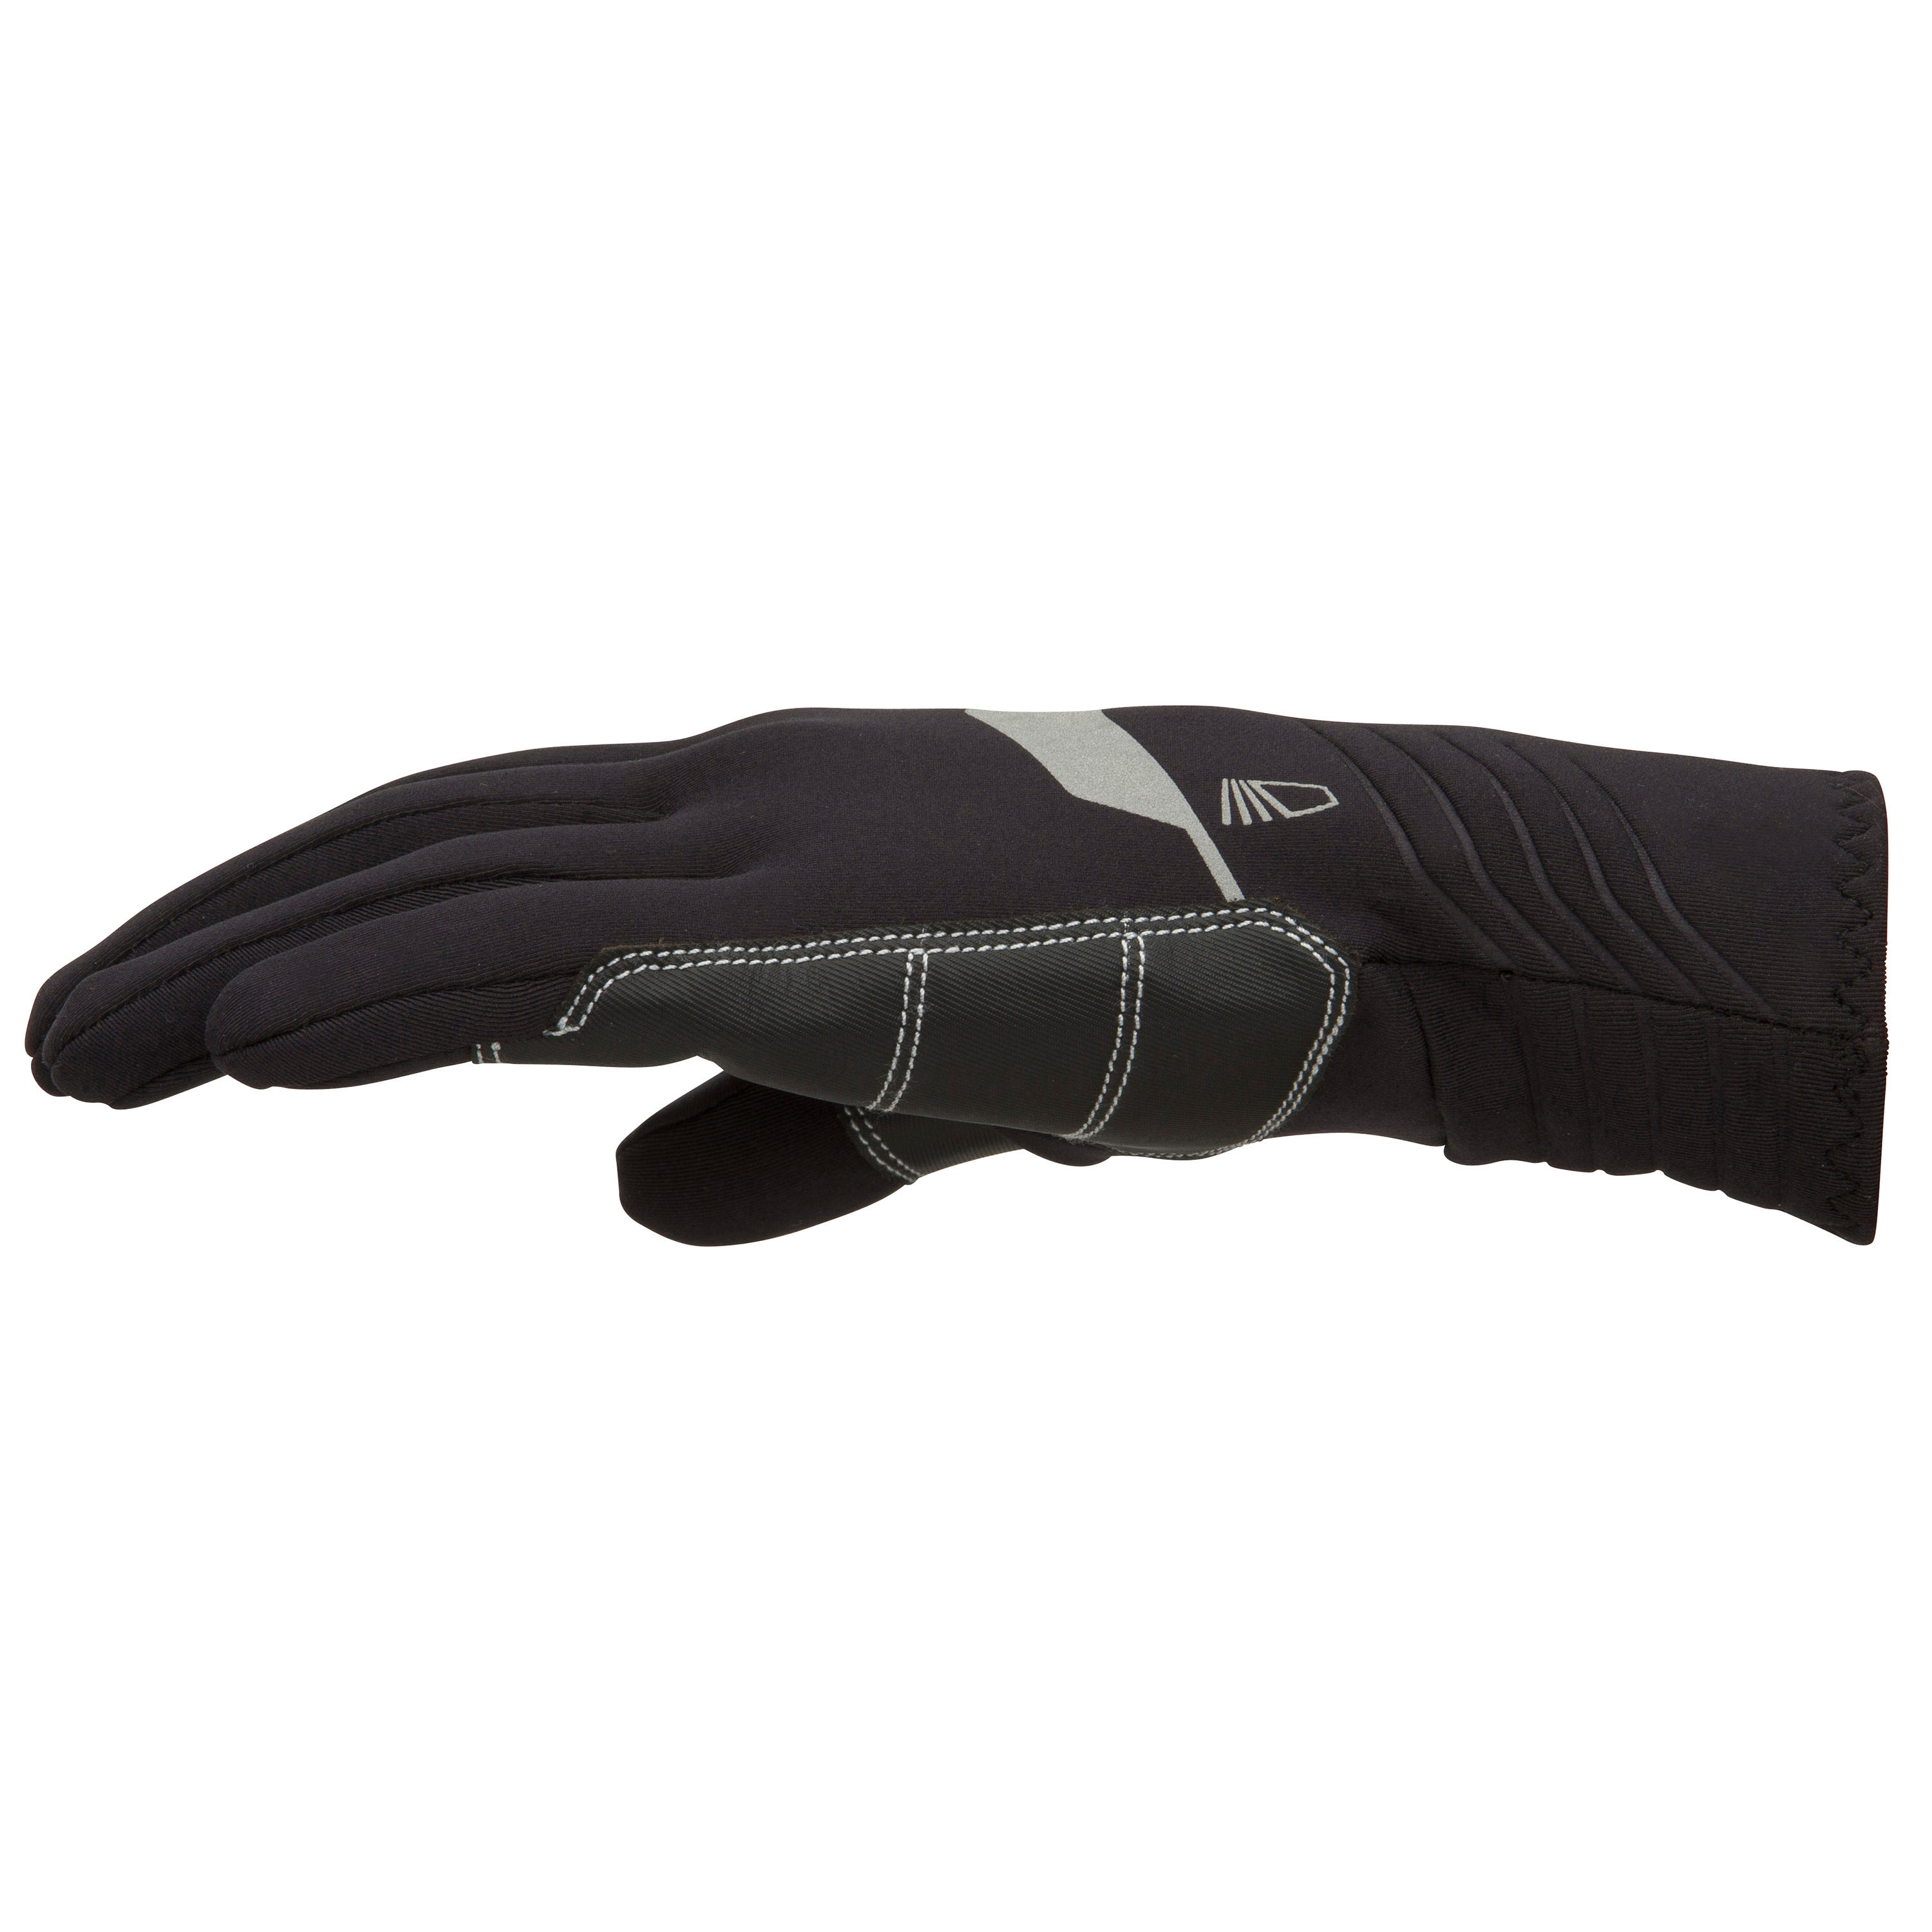 Adult sailing gloves 900 - 1 mm neoprene, black 5/5